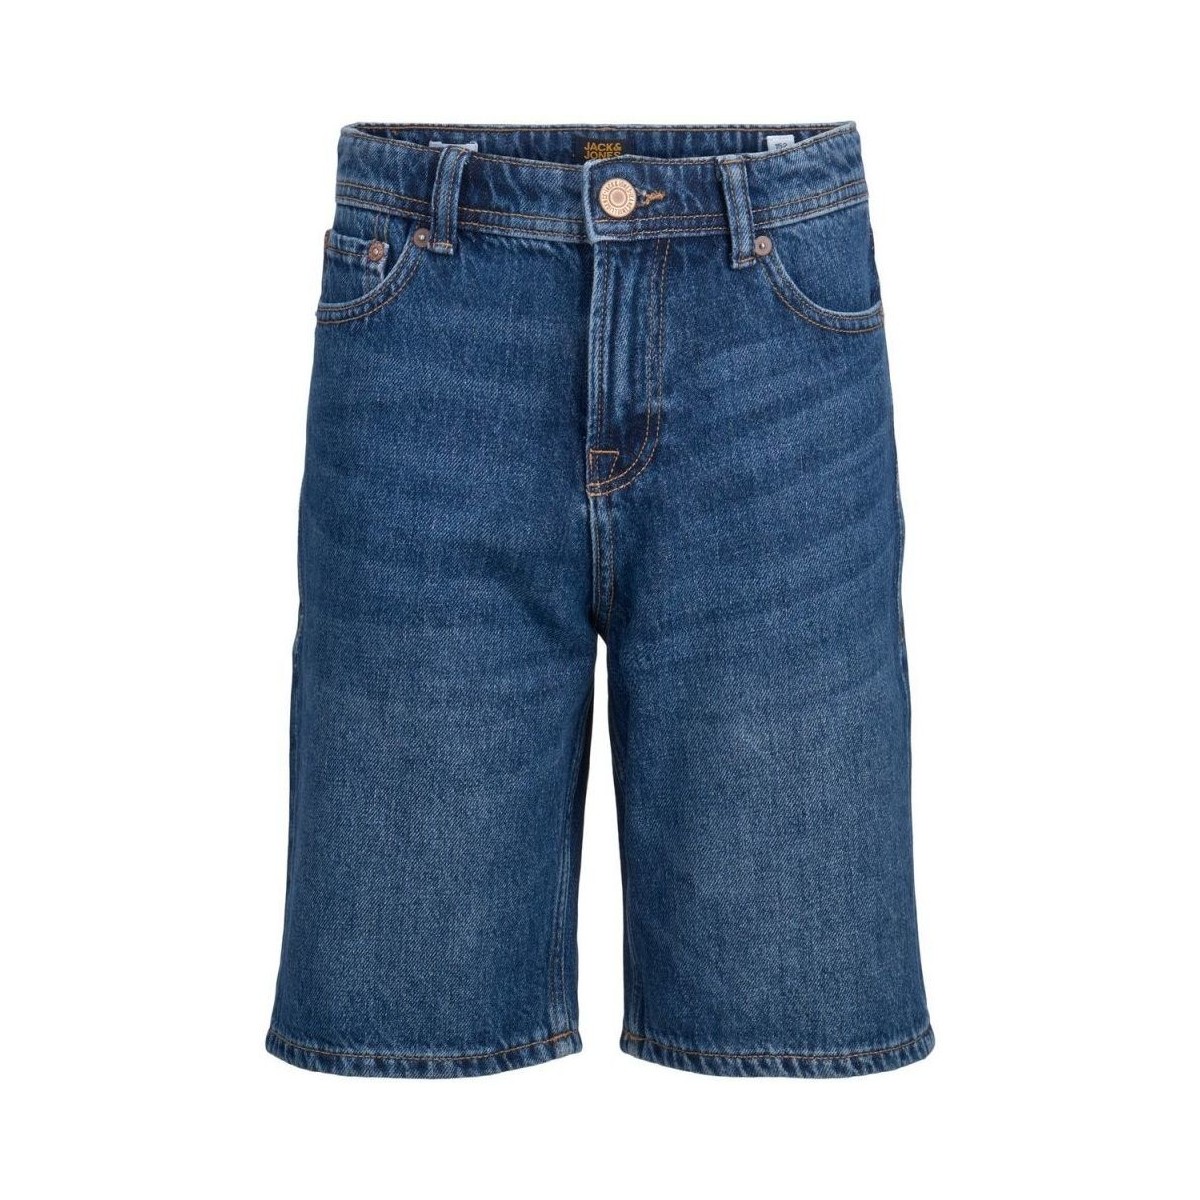 Kleidung Jungen Shorts / Bermudas Jack & Jones 12205917 CHRIS SHORT-BLUE DENIM Blau